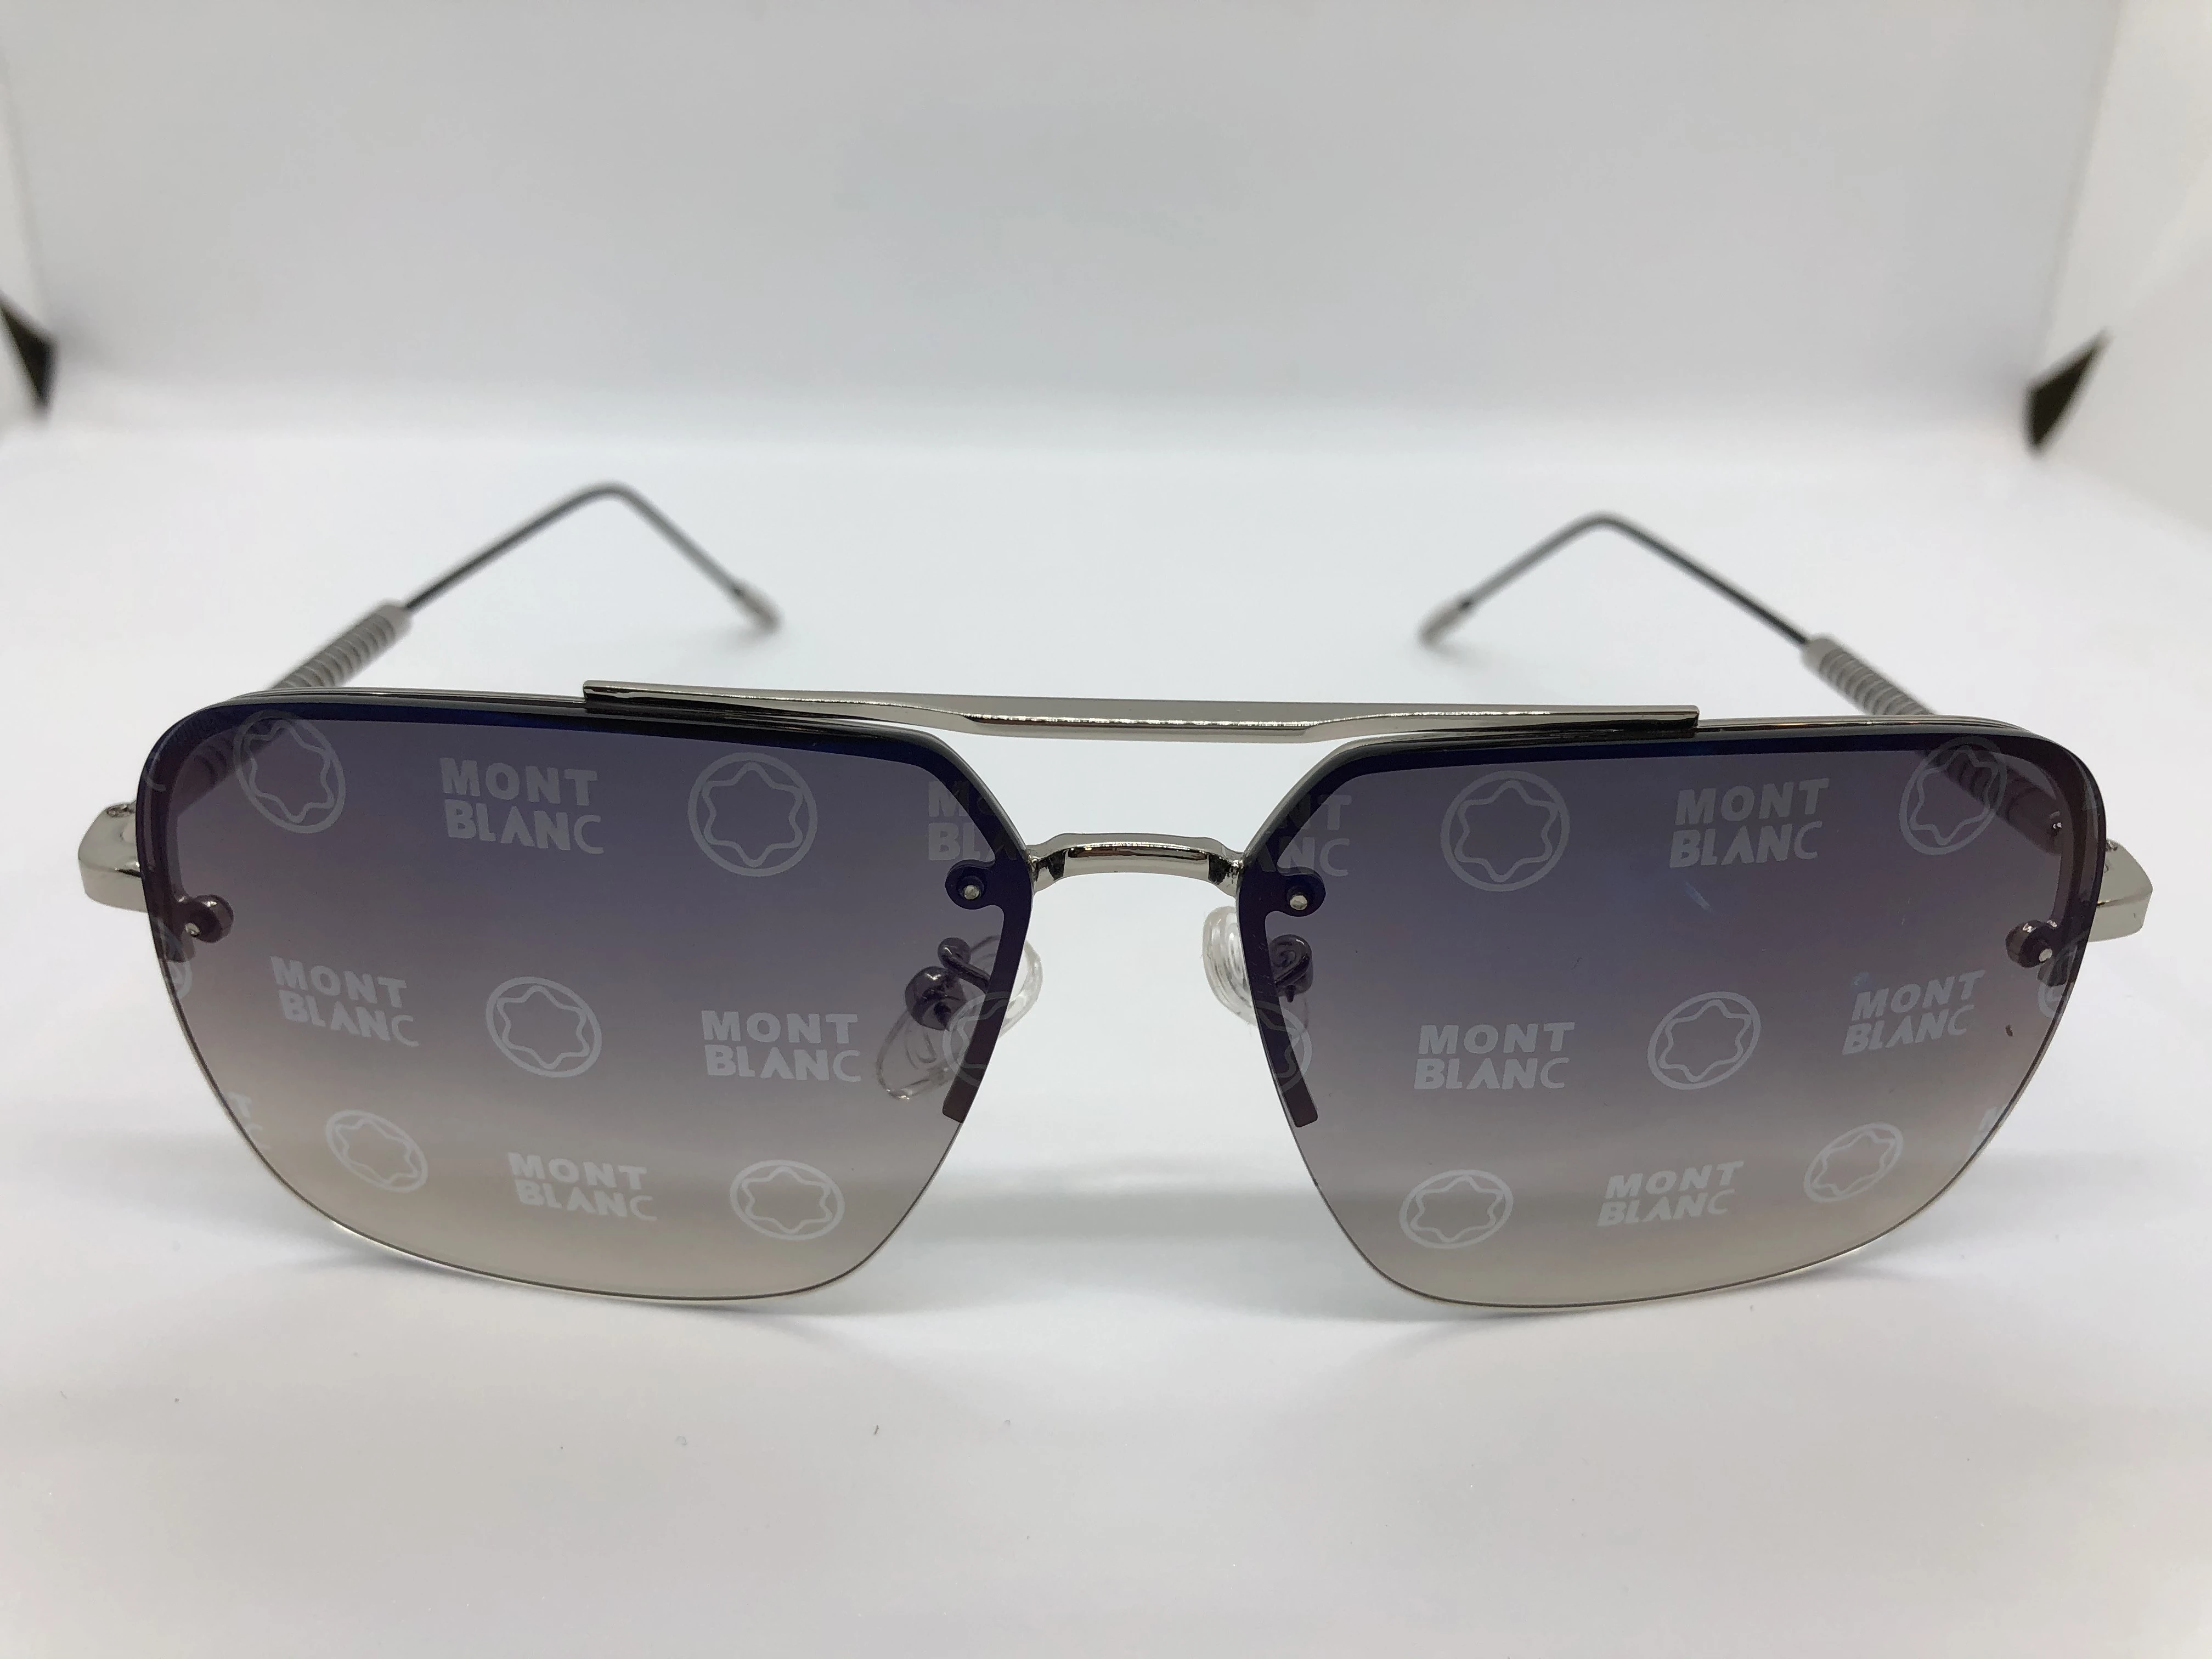 MONTBLANC Sunglasses - Silver Metal Frame - Black Gradient Printed Lenses - Silver Metal Arm - Men